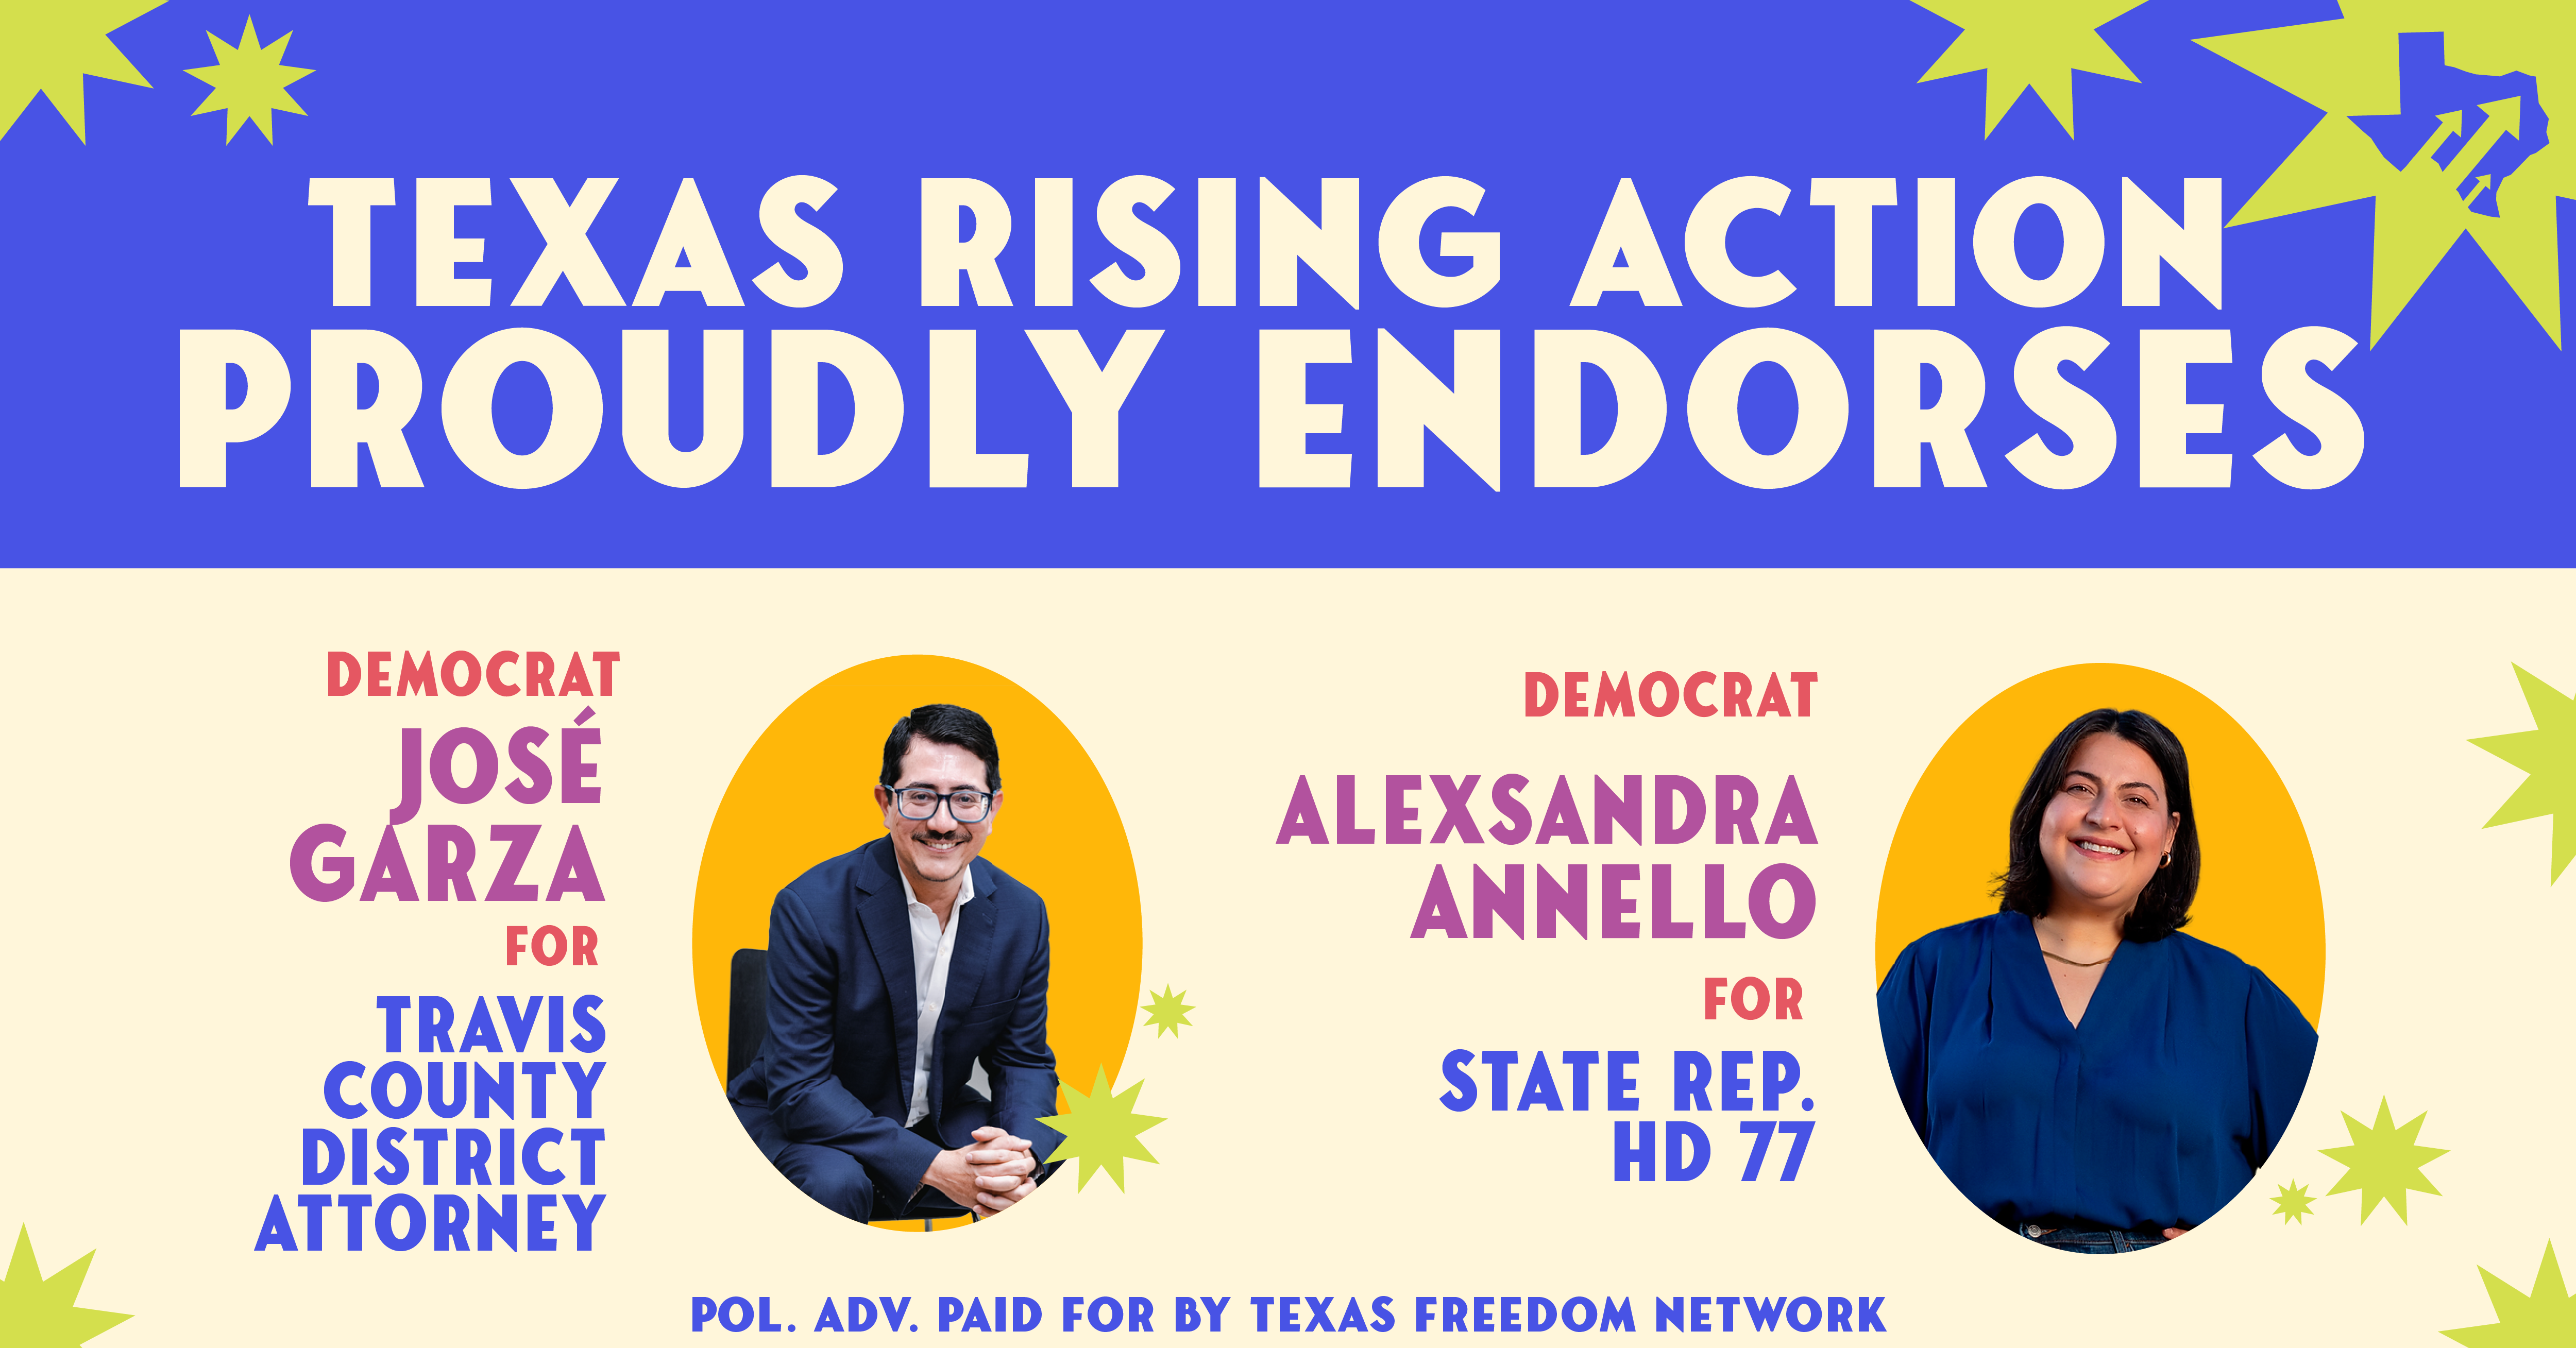 TXRA proudly endorses José Garza for Travis County DA and Alexsandra Annello for HD 77. Pol. adv. paid for by Texas Freedom Network.